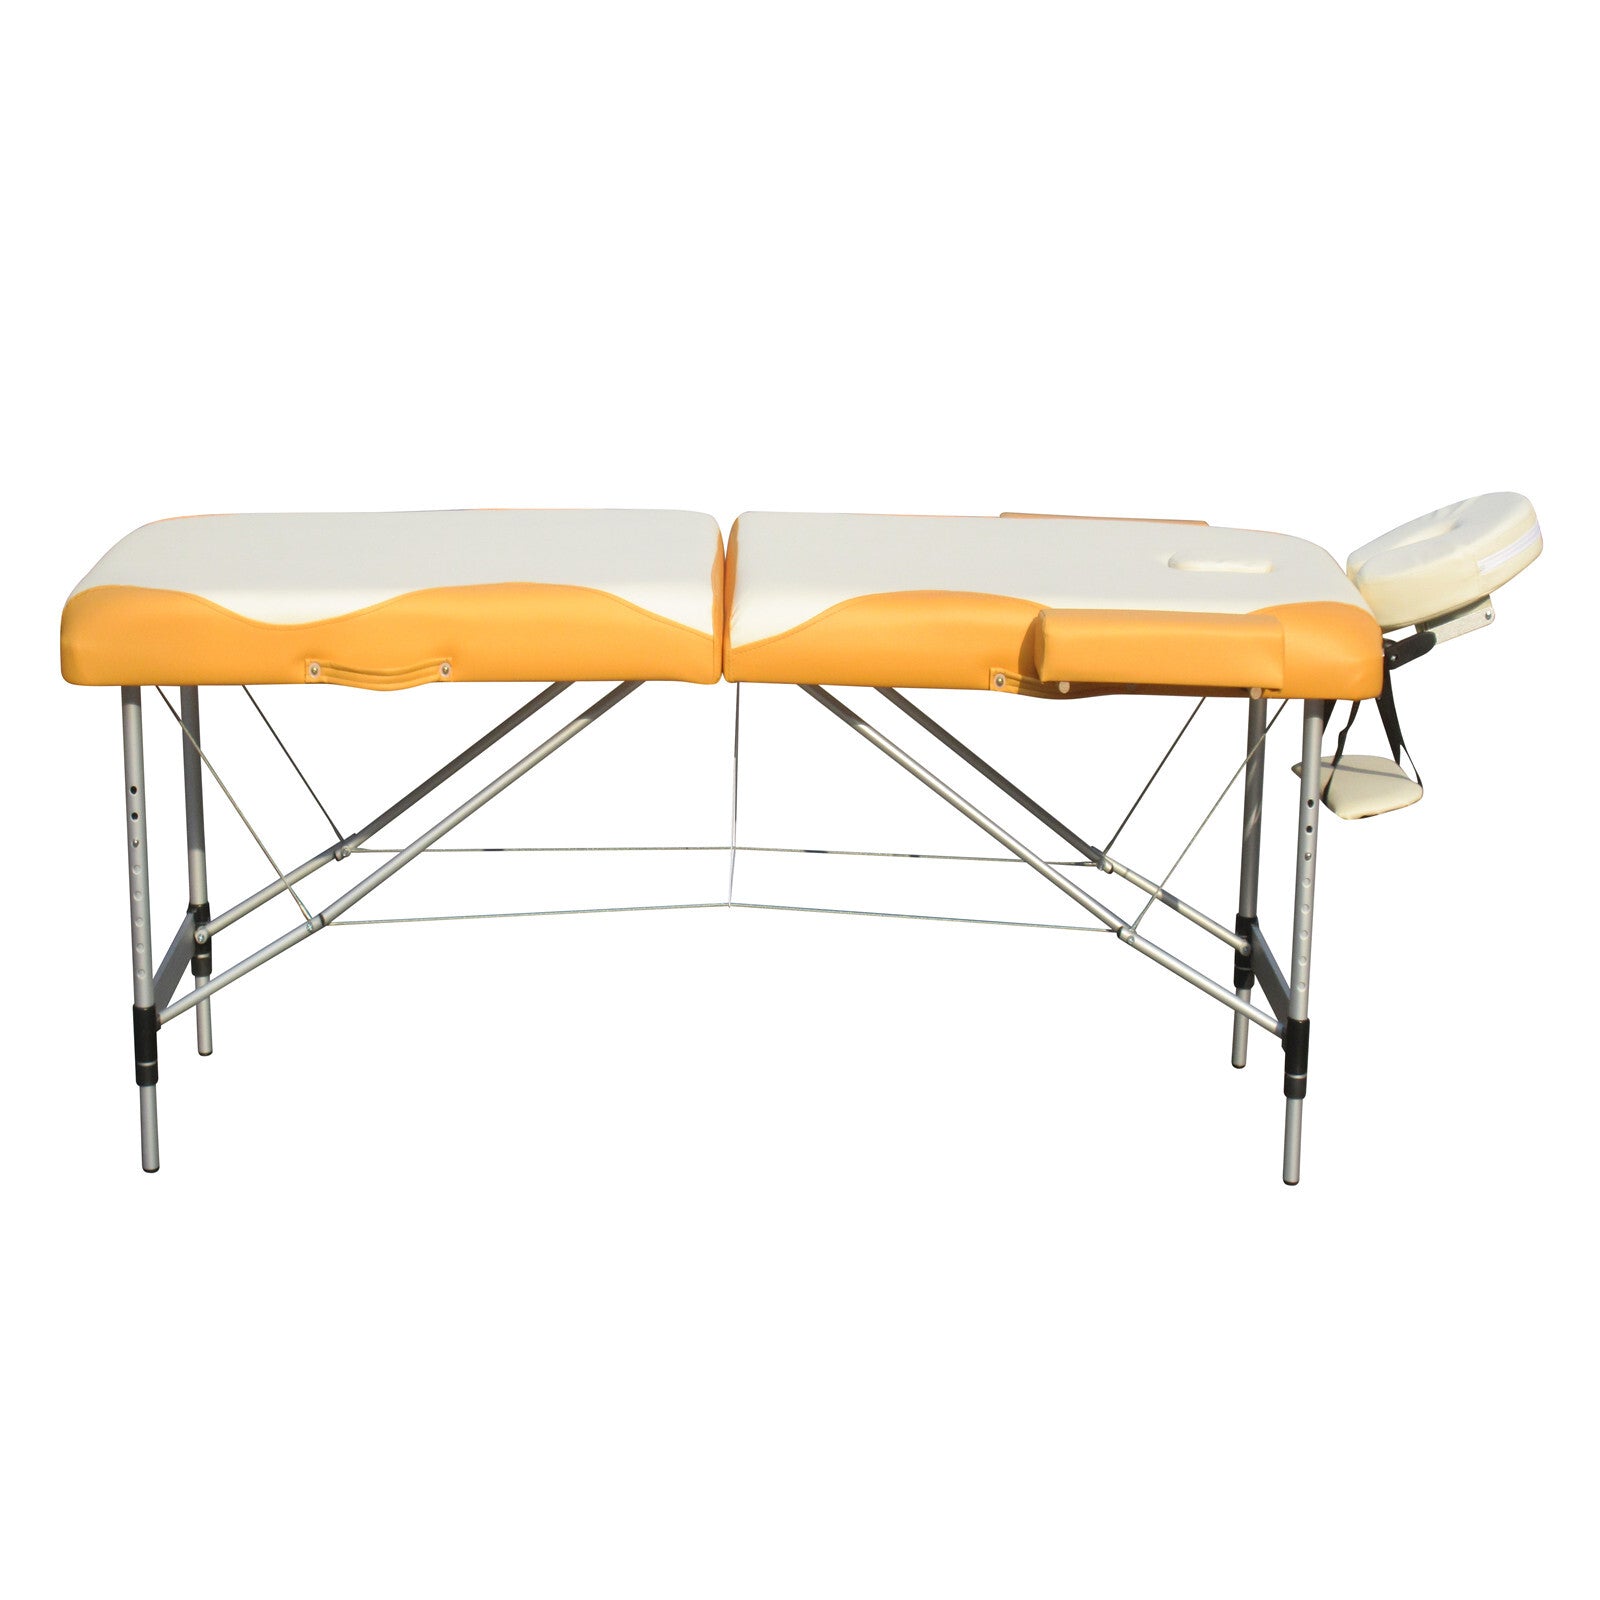 2 Fold Portable Aluminium Massage Table Massage Bed Beauty Therapy - SILBERSHELL